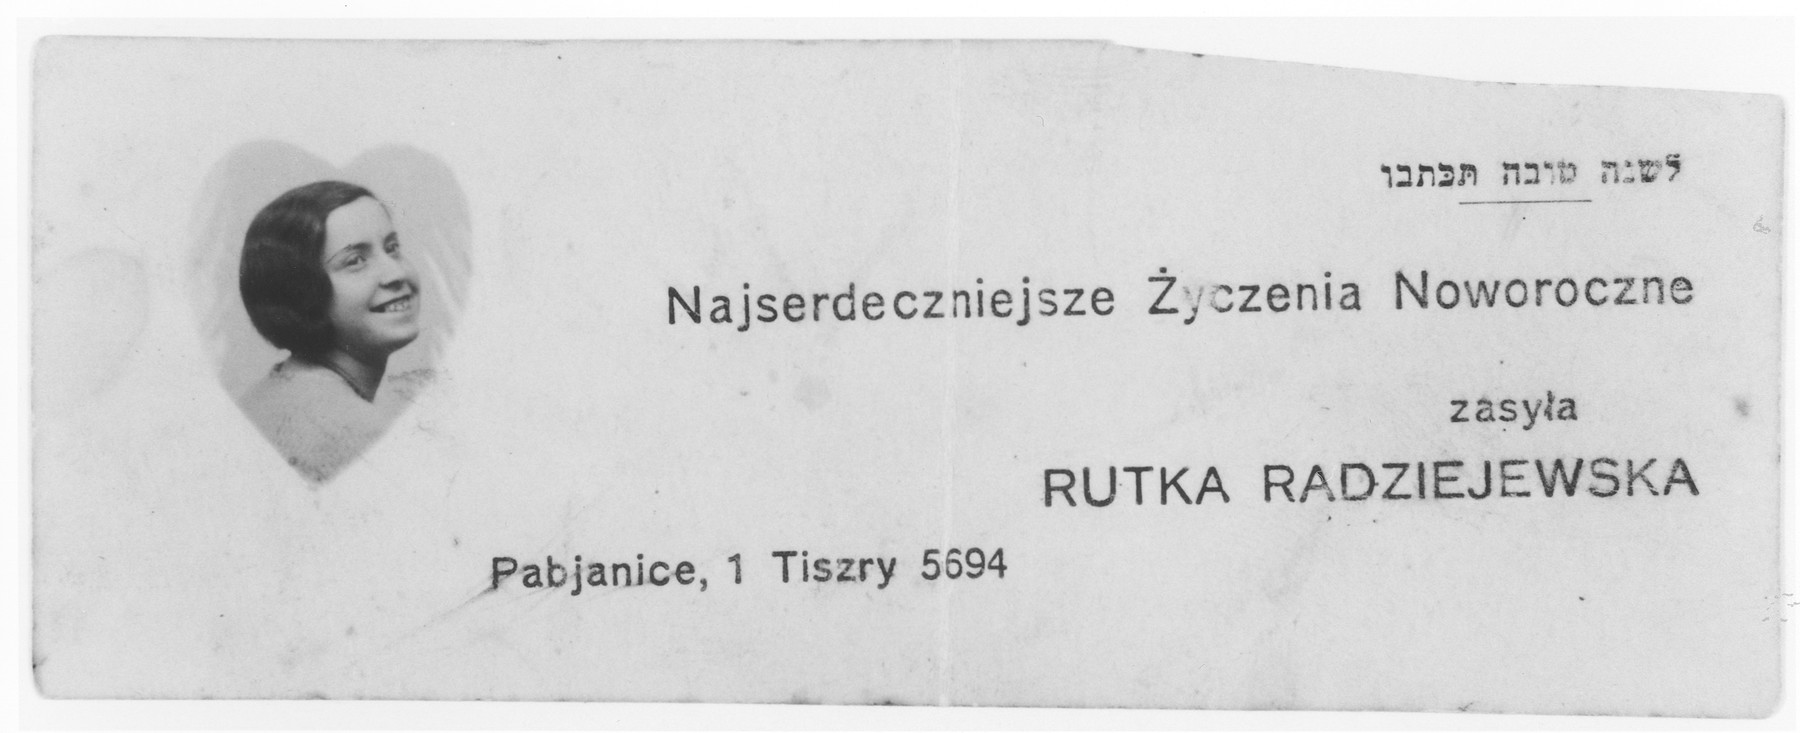 Personalized Jewish New Years card in Polish and Hebrew sent by Rutka Radziejewska from Pabianice, Poland.

Rutka is the niece of Chaja Sura Lajbman (Chaja's brother's daughter).